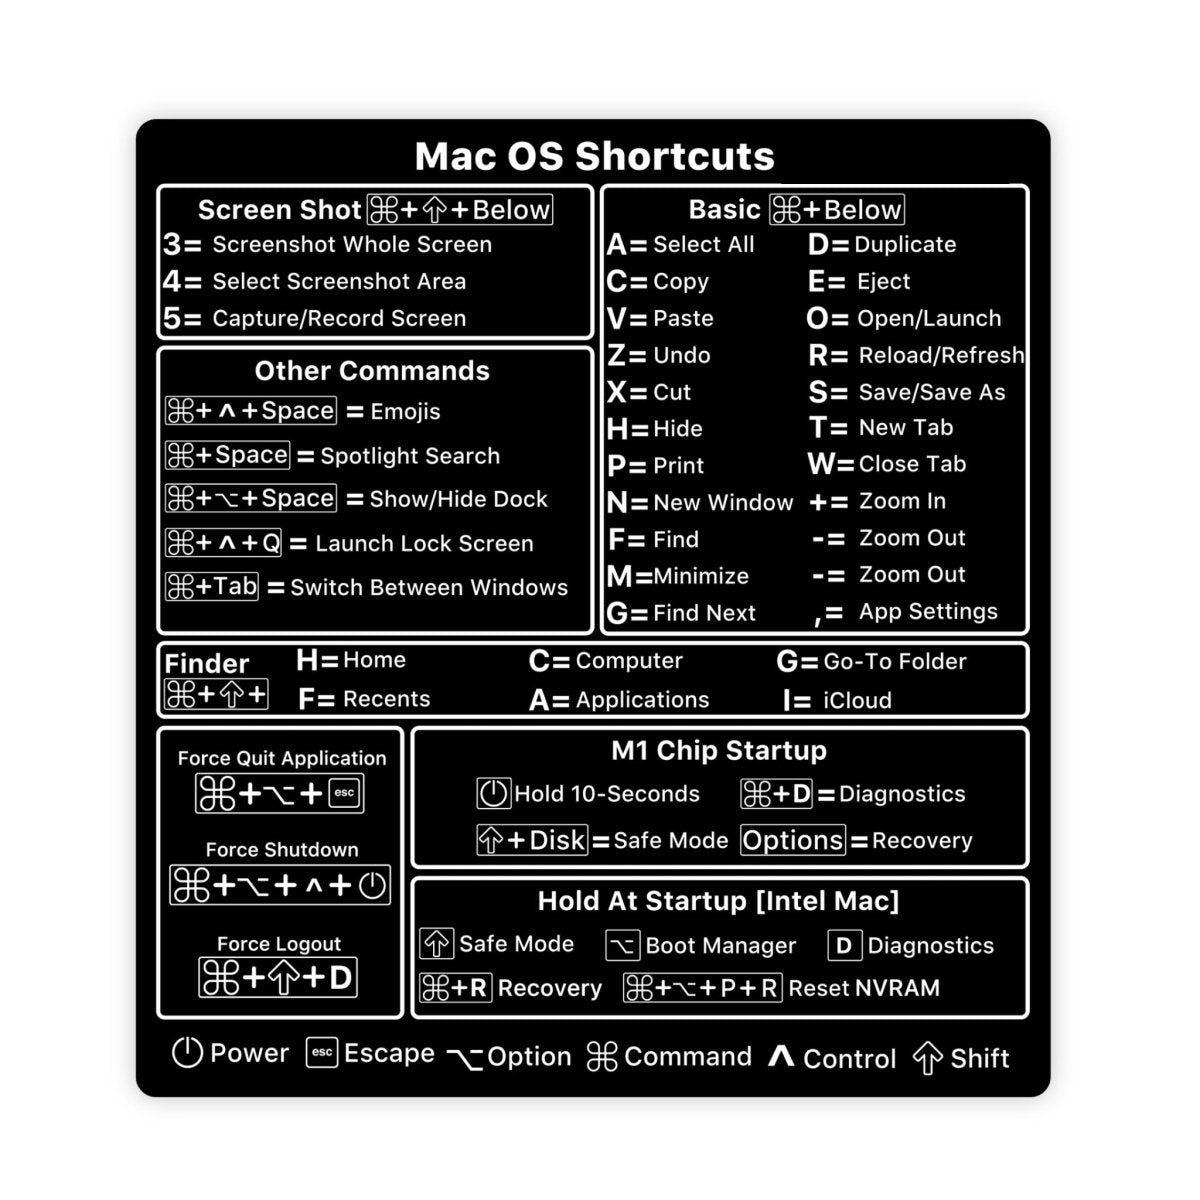 [M1/M2/Intel] Clear Transparent Mac OS Shortcut Sticker [Works With All Mac Laptops] - stickerbull[M1/M2/Intel] Clear Transparent Mac OS Shortcut Sticker [Works With All Mac Laptops]Retail StickerstickerbullstickerbullTaylor_BlackMac [#77]Black[M1/M2/Intel] Clear Transparent Mac OS Shortcut Sticker [Works With All Mac Laptops]